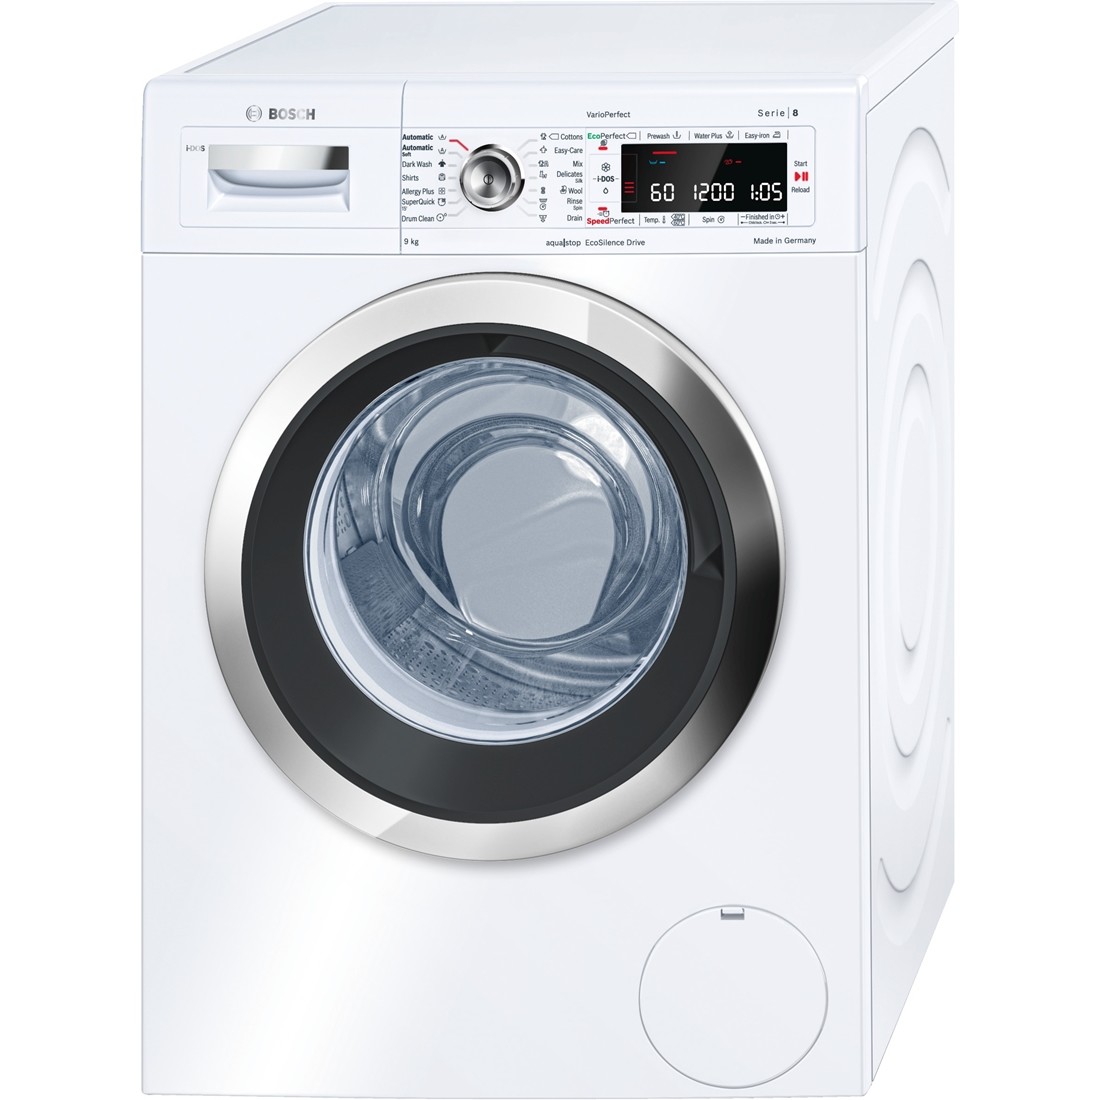 Máy giặt Bosch I-Dos WAW32640EU